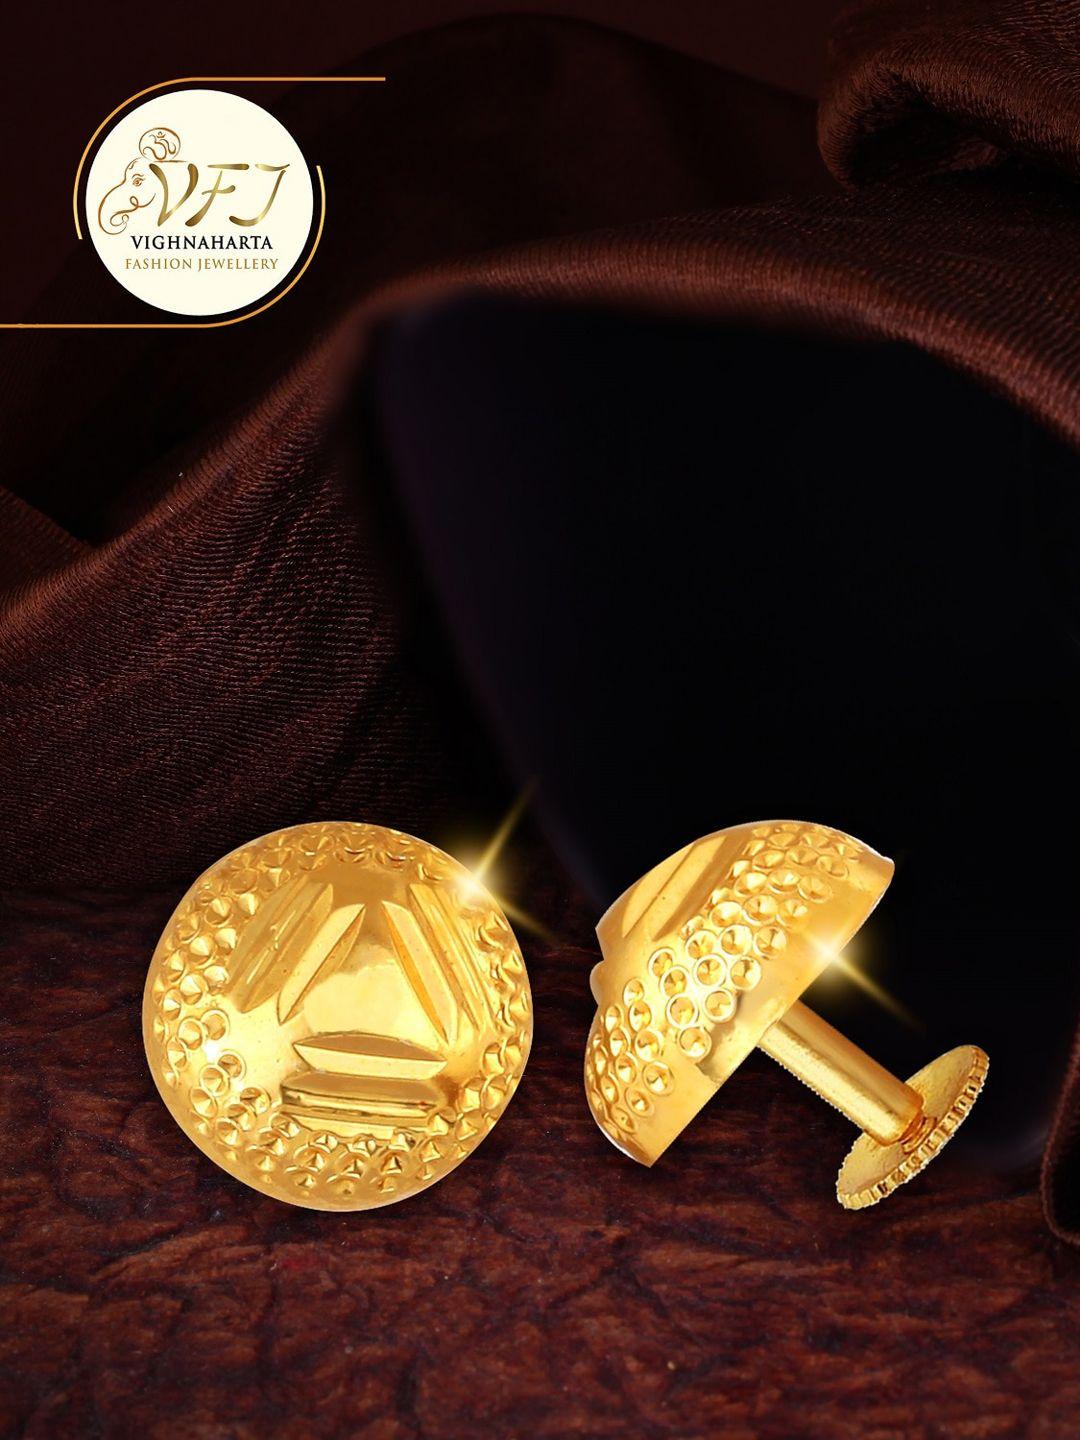 vighnaharta gold-plated circular studs earrings